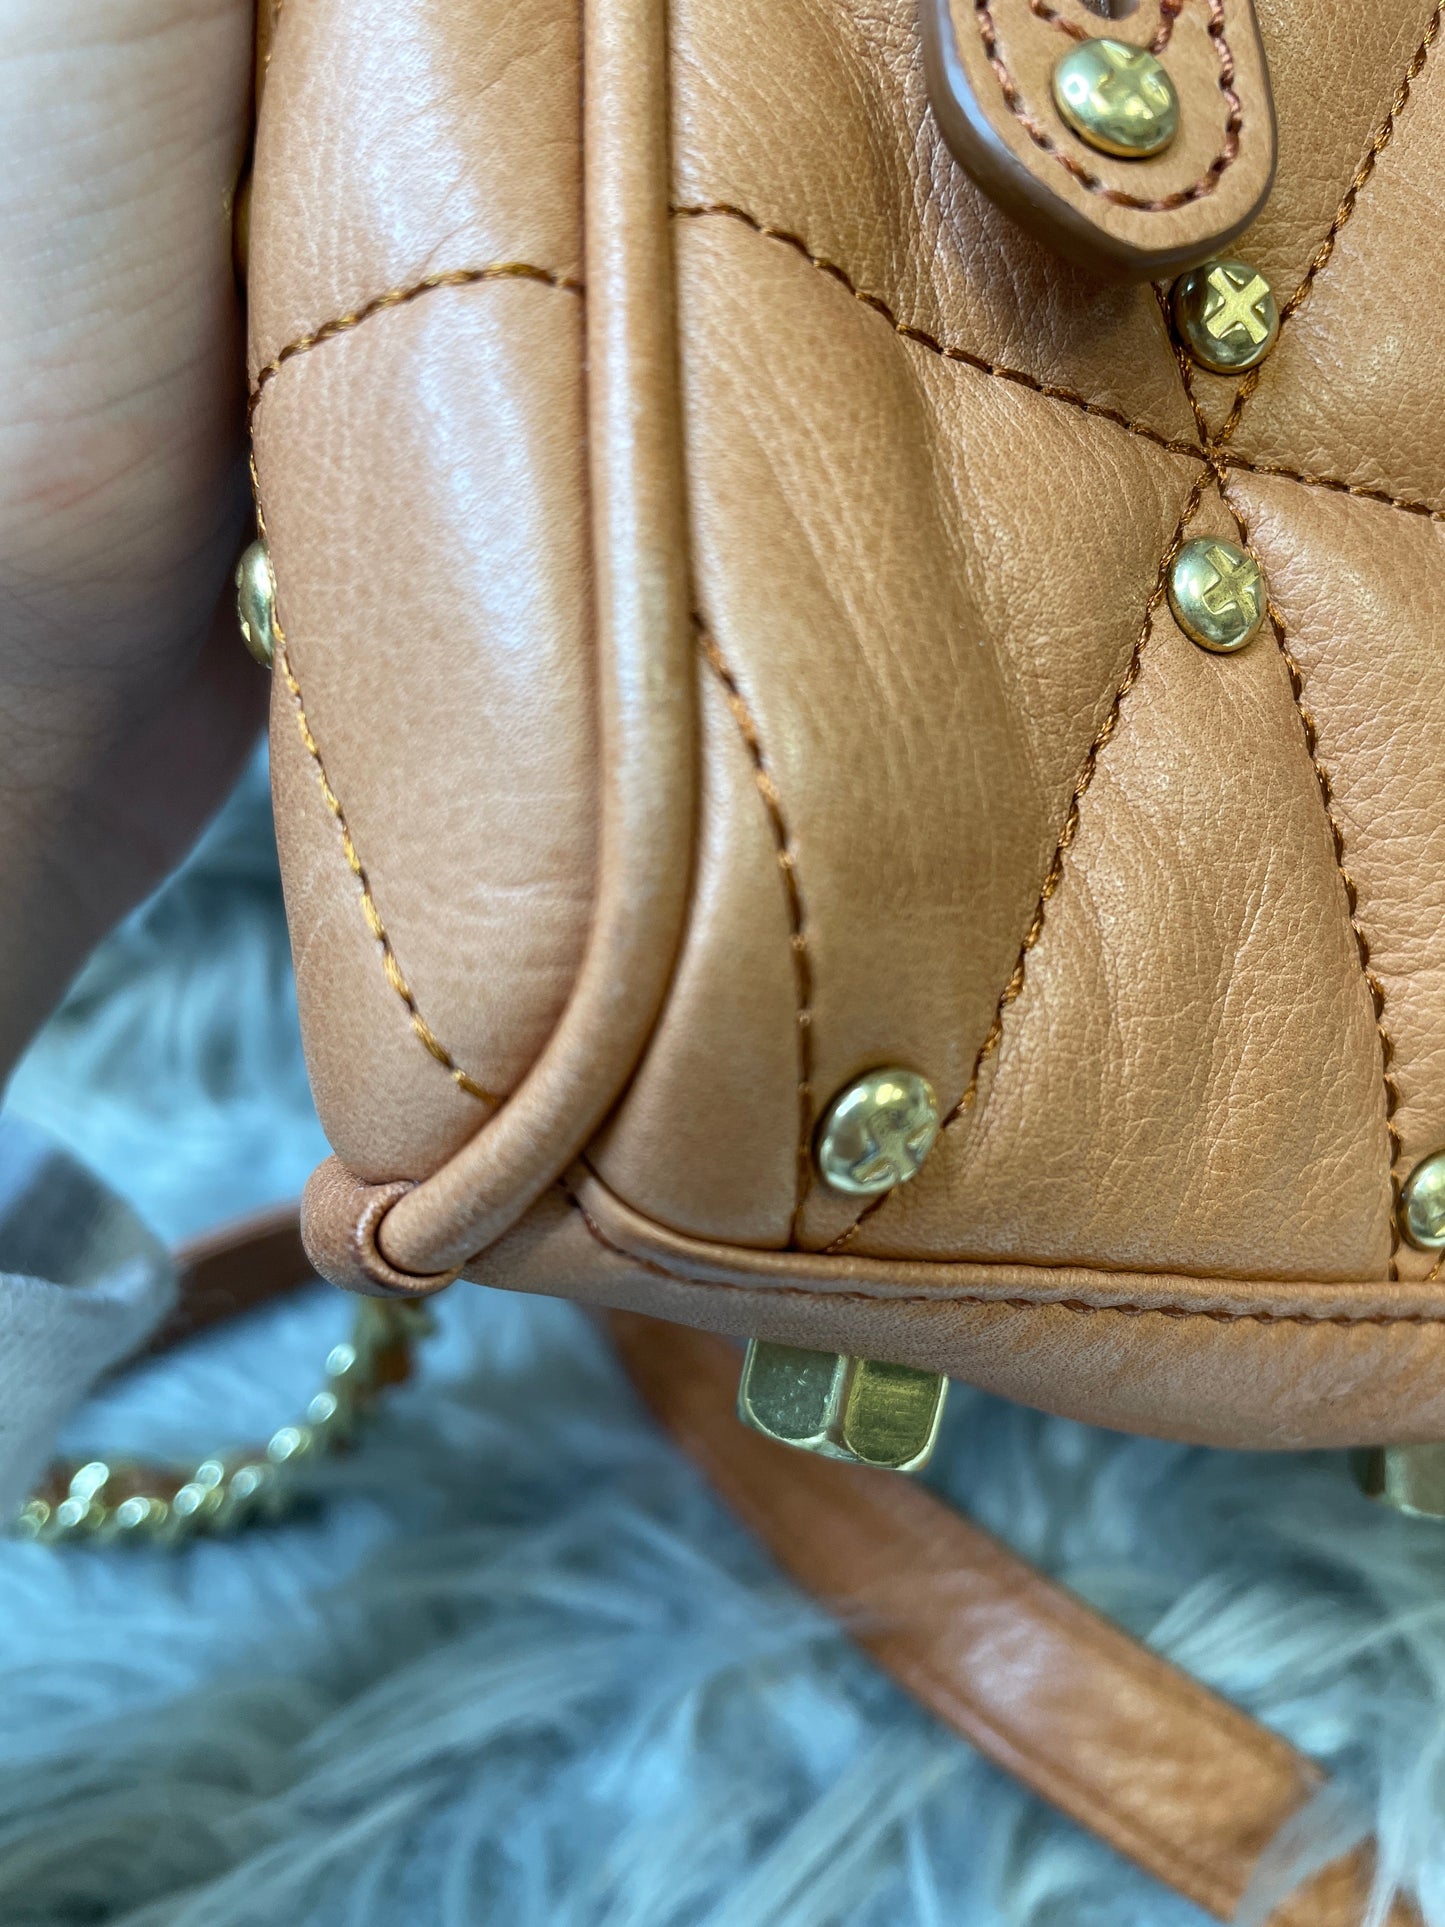 Handbag Leather By Rebecca Minkoff  Size: Medium